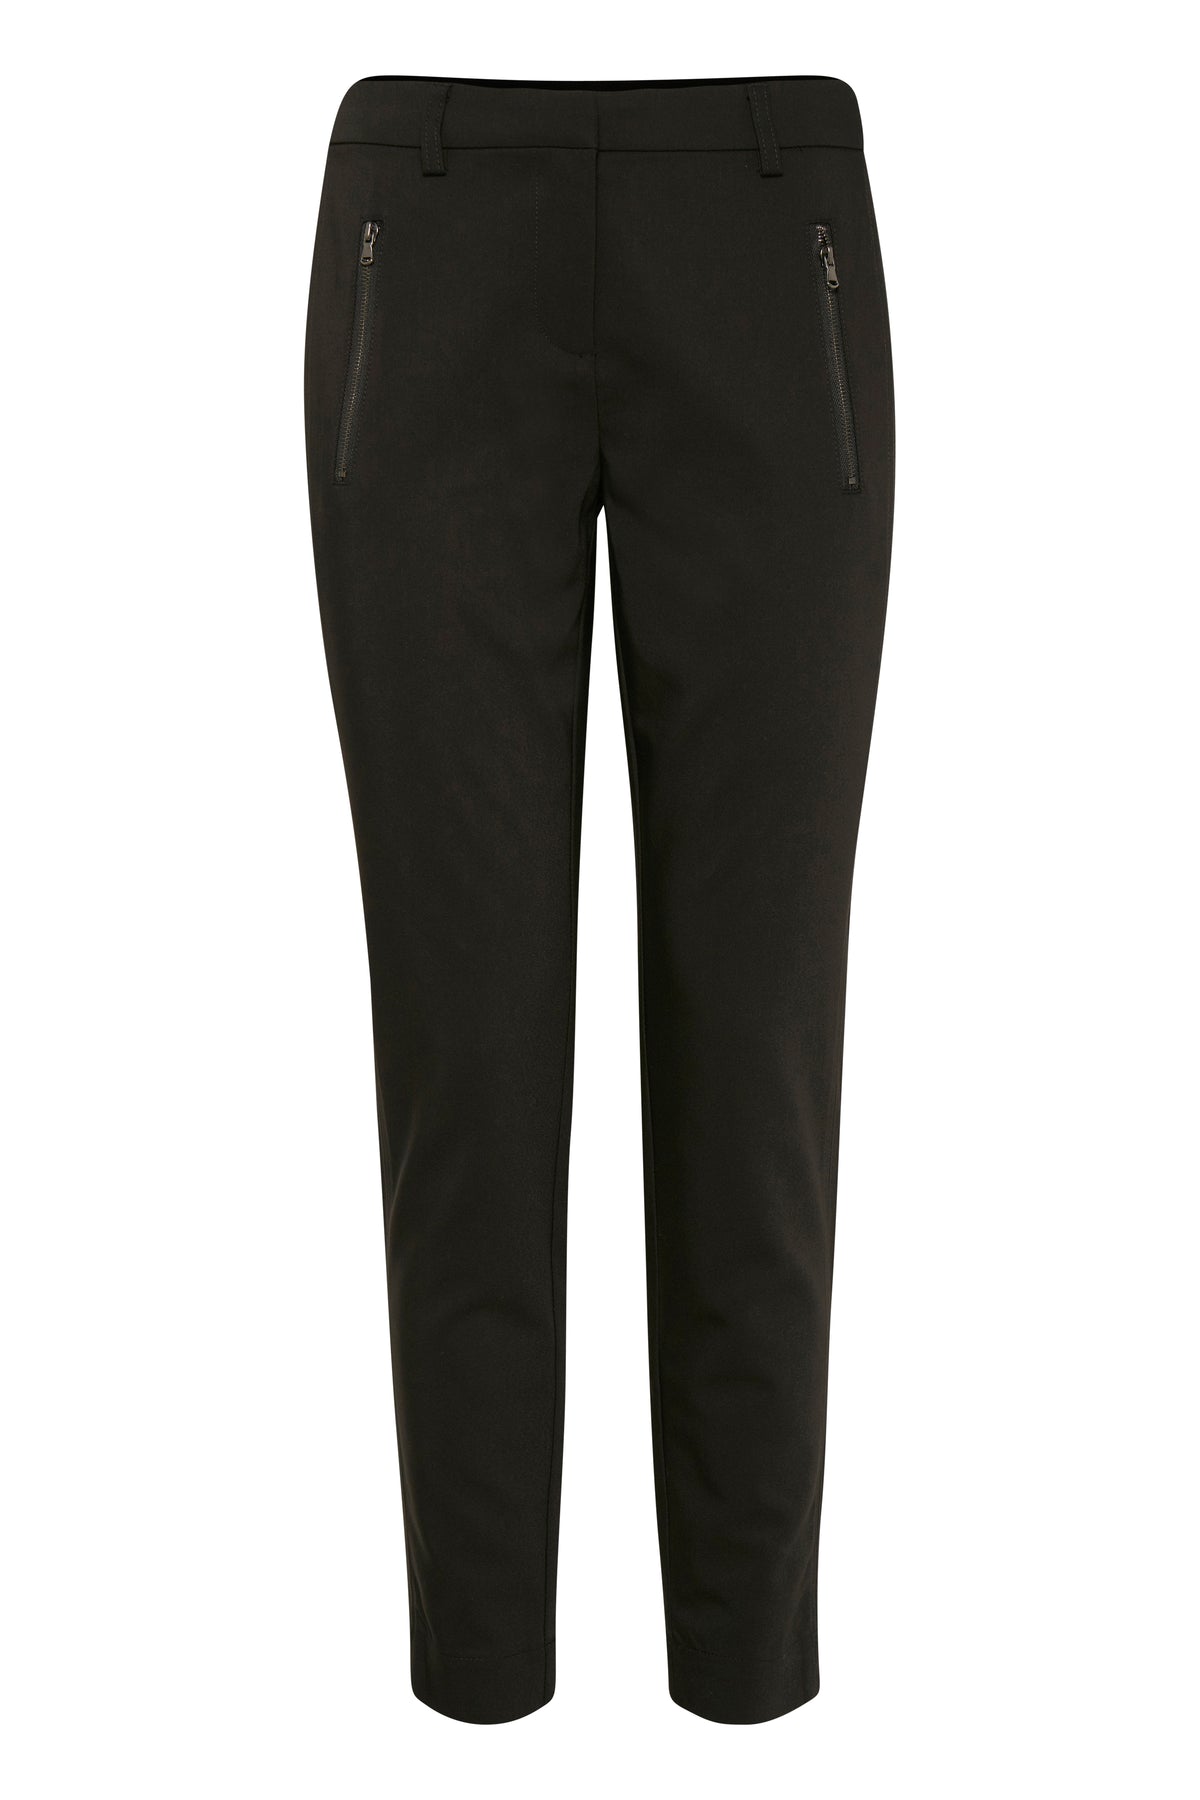 Fransa Zapant Black Cigarette Style Trousers, 20603400